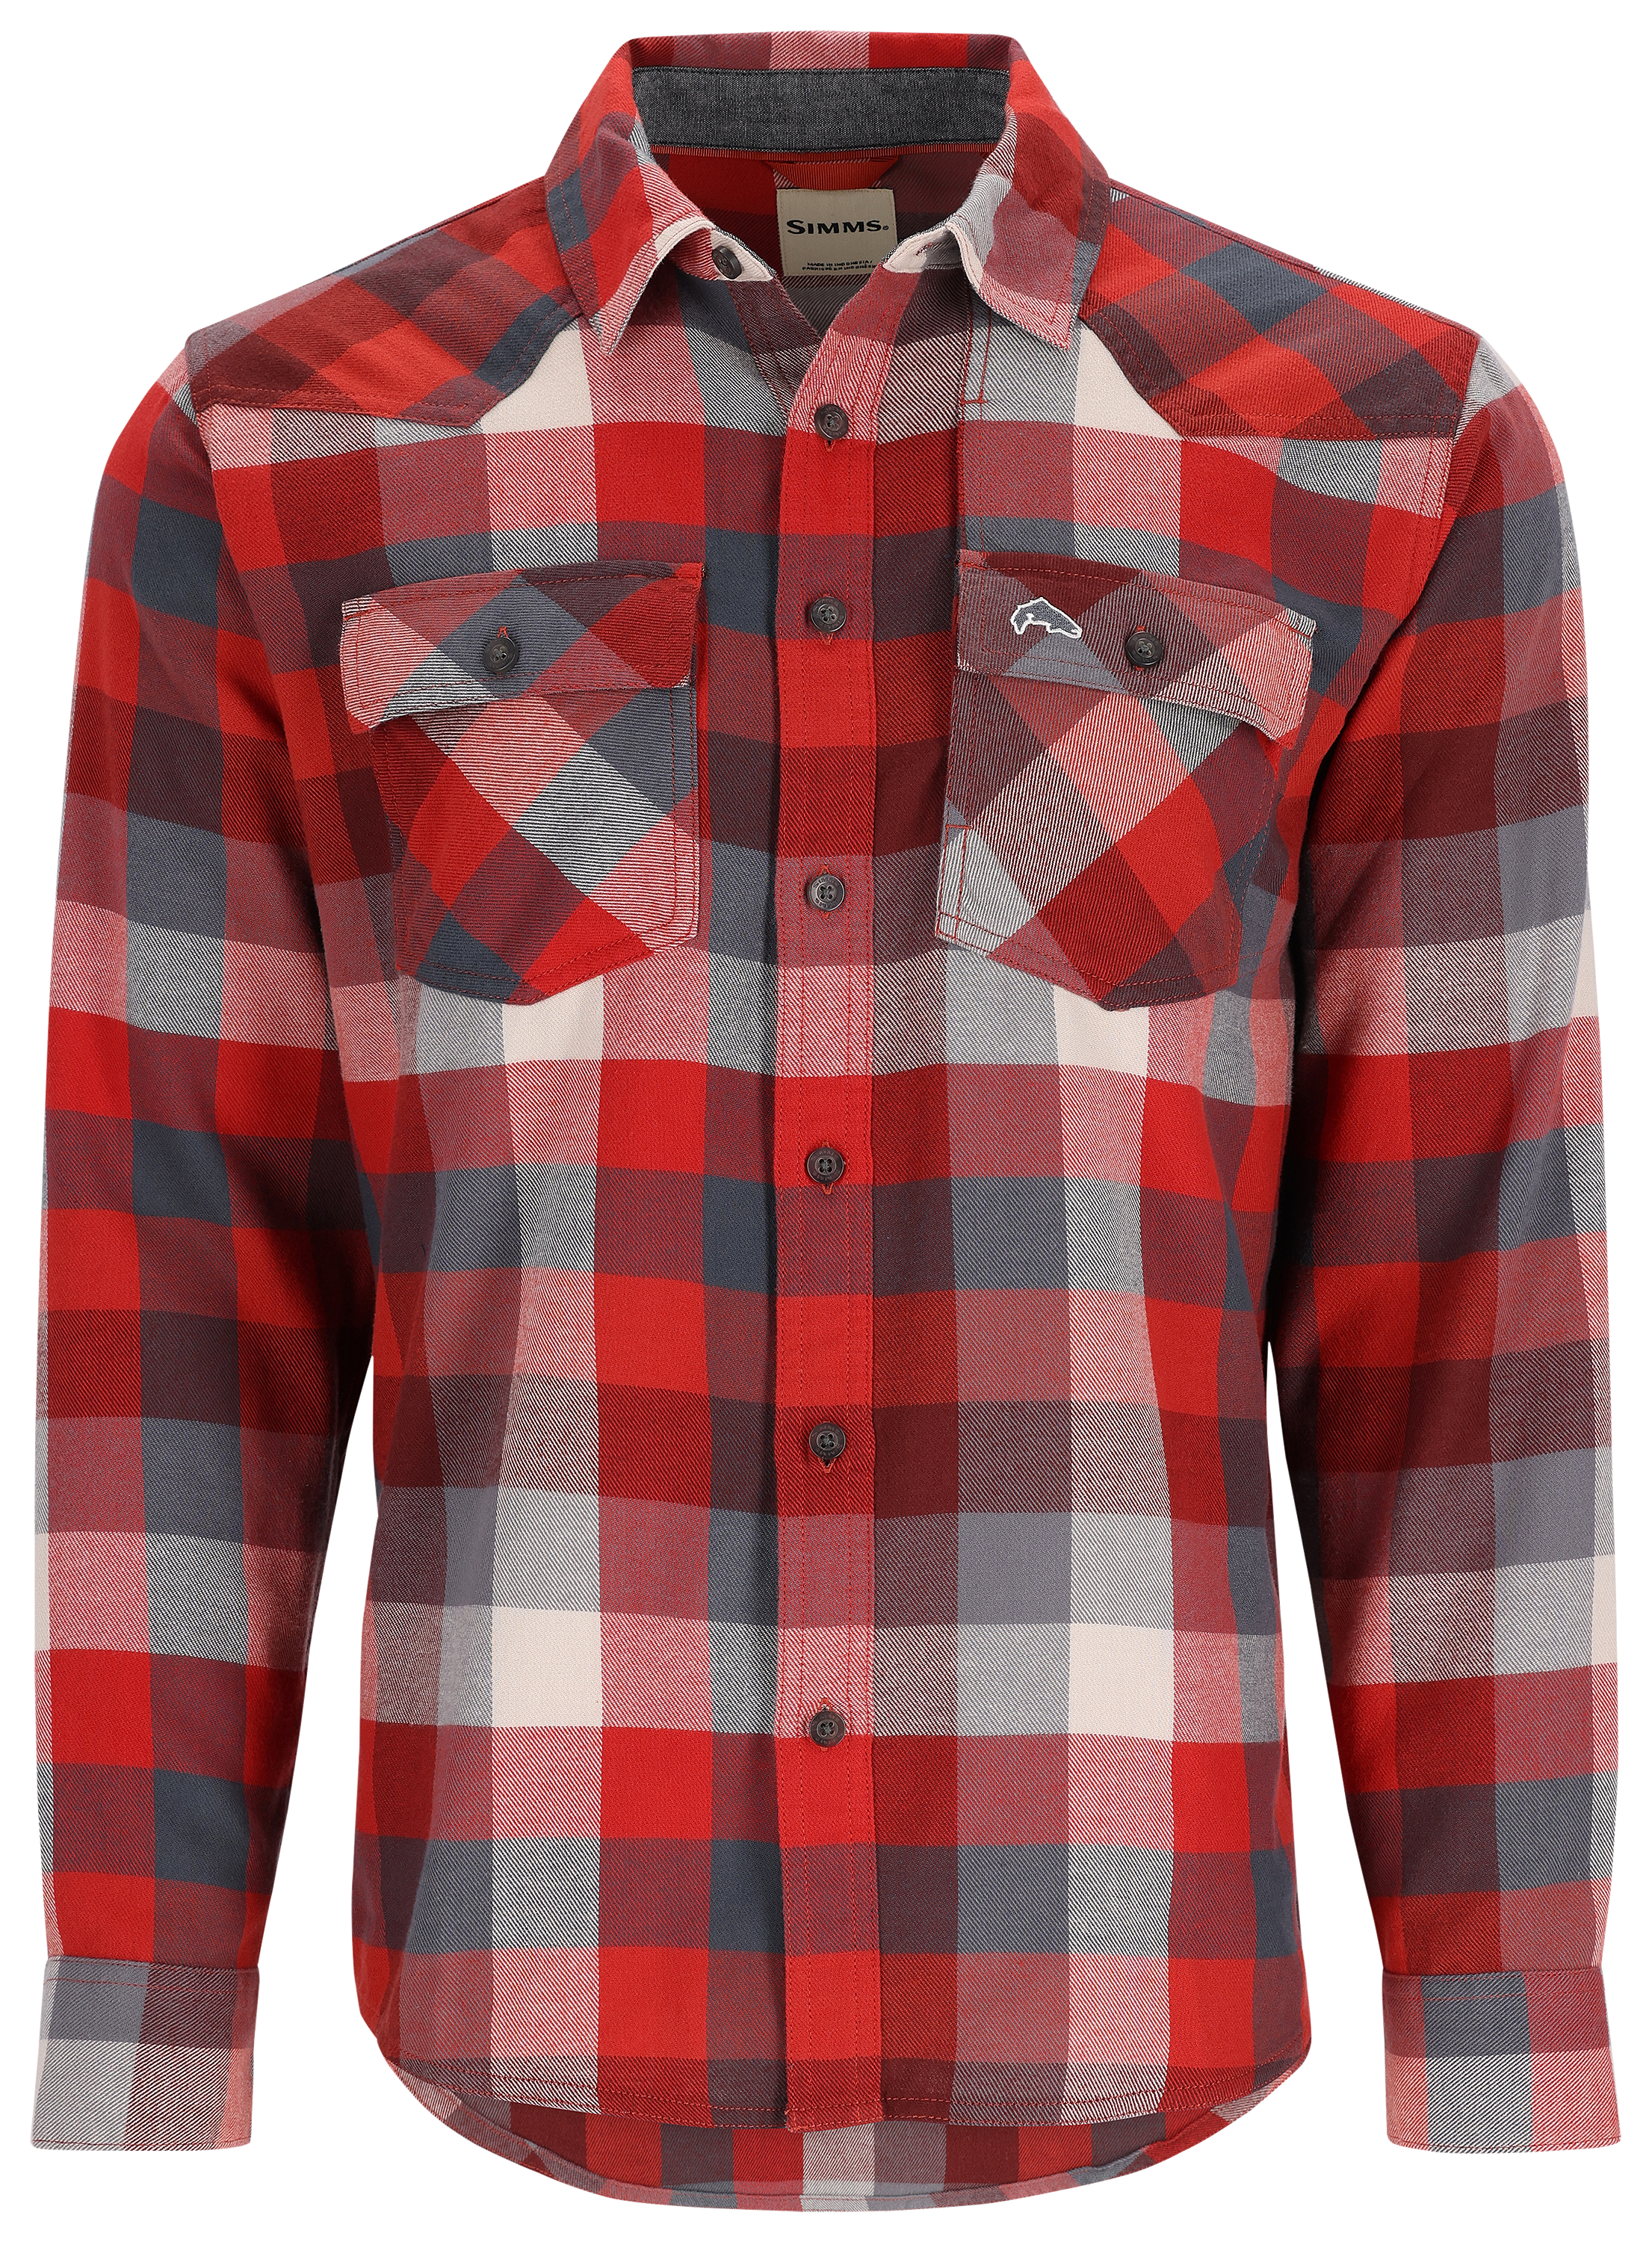 Simms Santee Flannel Long-Sleeve Shirt for Men - Auburn Red/Slate Buffalo Check - S